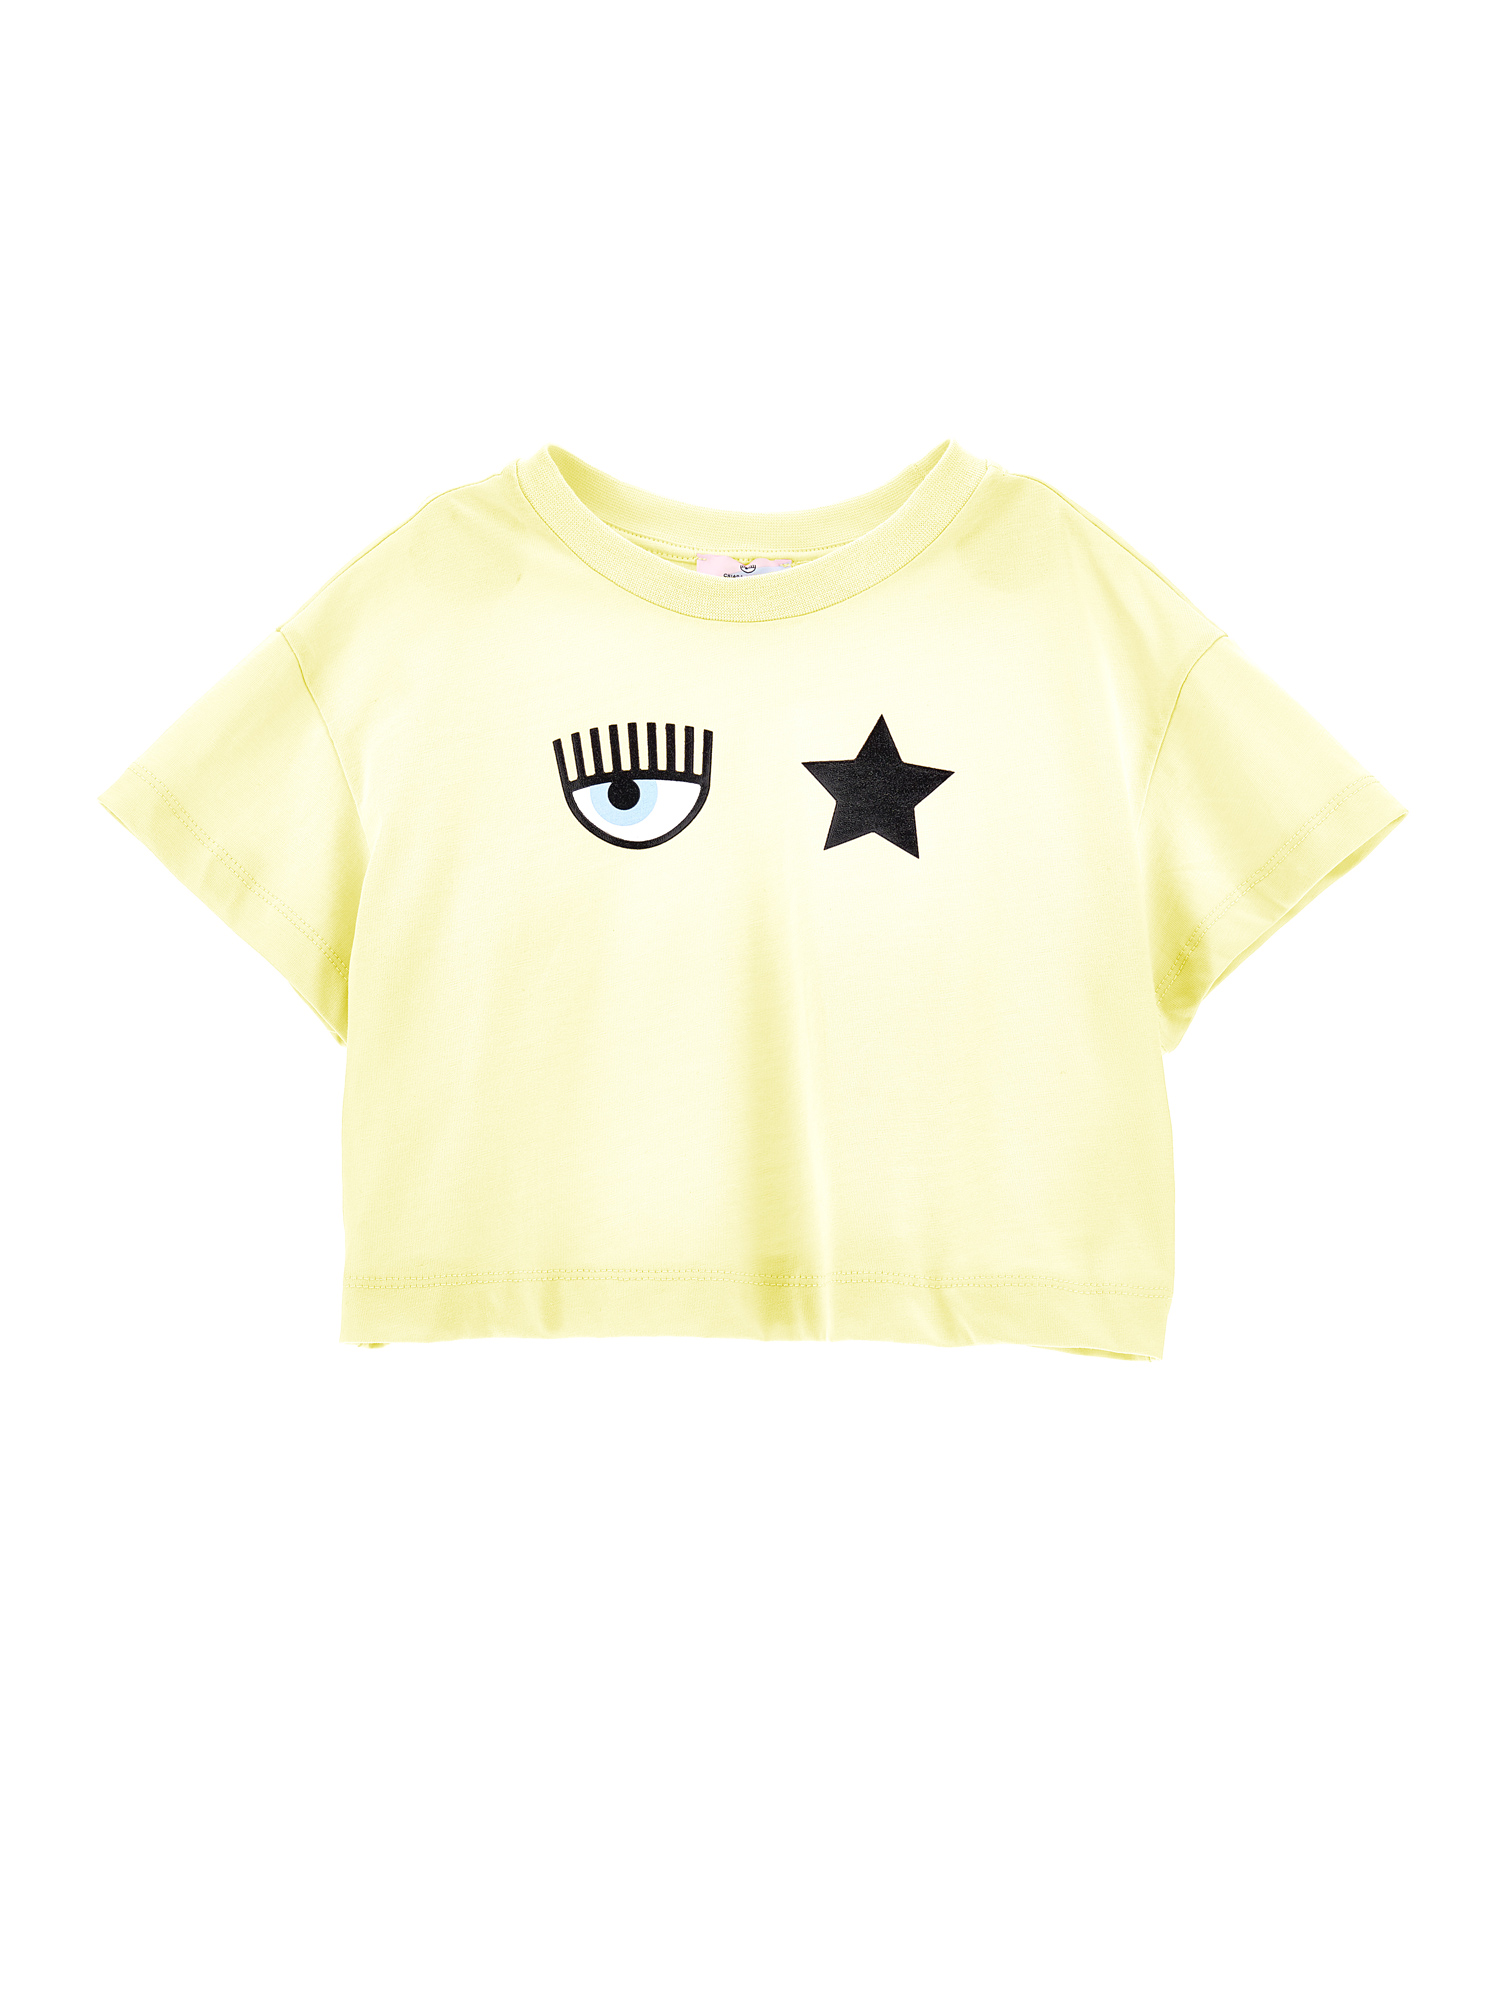 Chiara Ferragni Babies'   Eyestar Cropped T-shirt In Wax Yellow